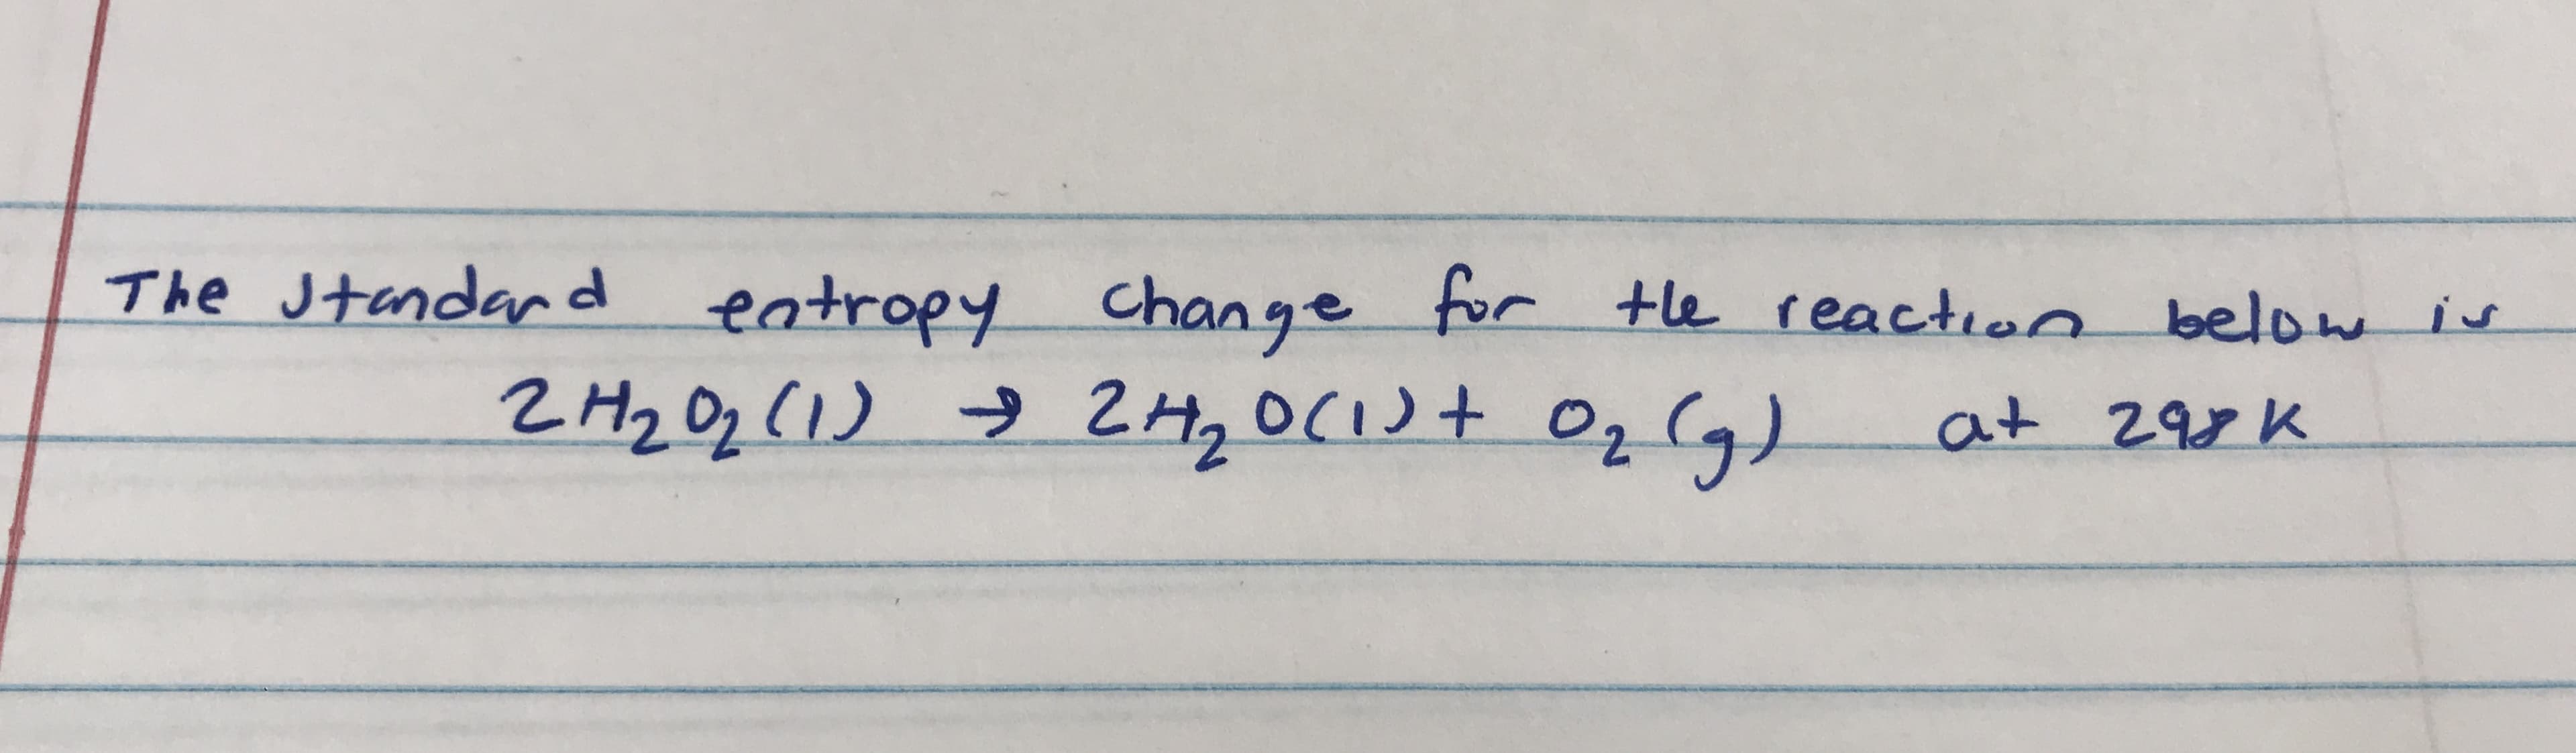 The Jtandar d entropy Change for the reaction below is
n below is
at 298 K
